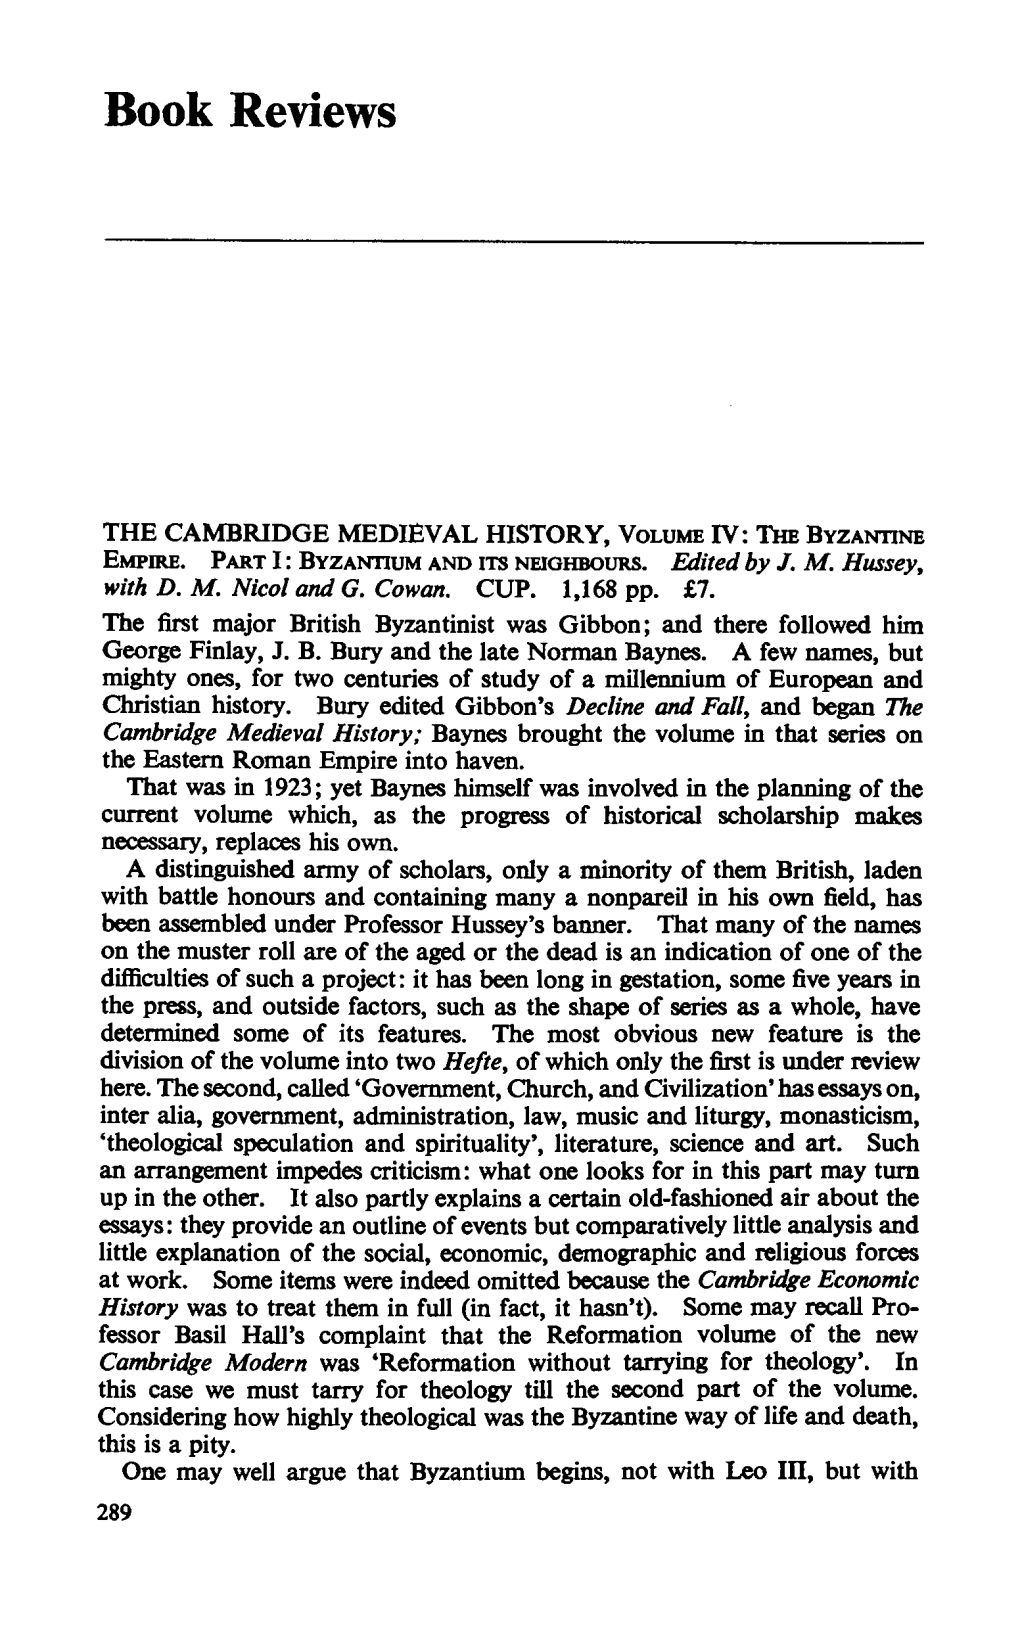 "Book Reviews," the Churchman 84.4 (Winter 1970): 289-320